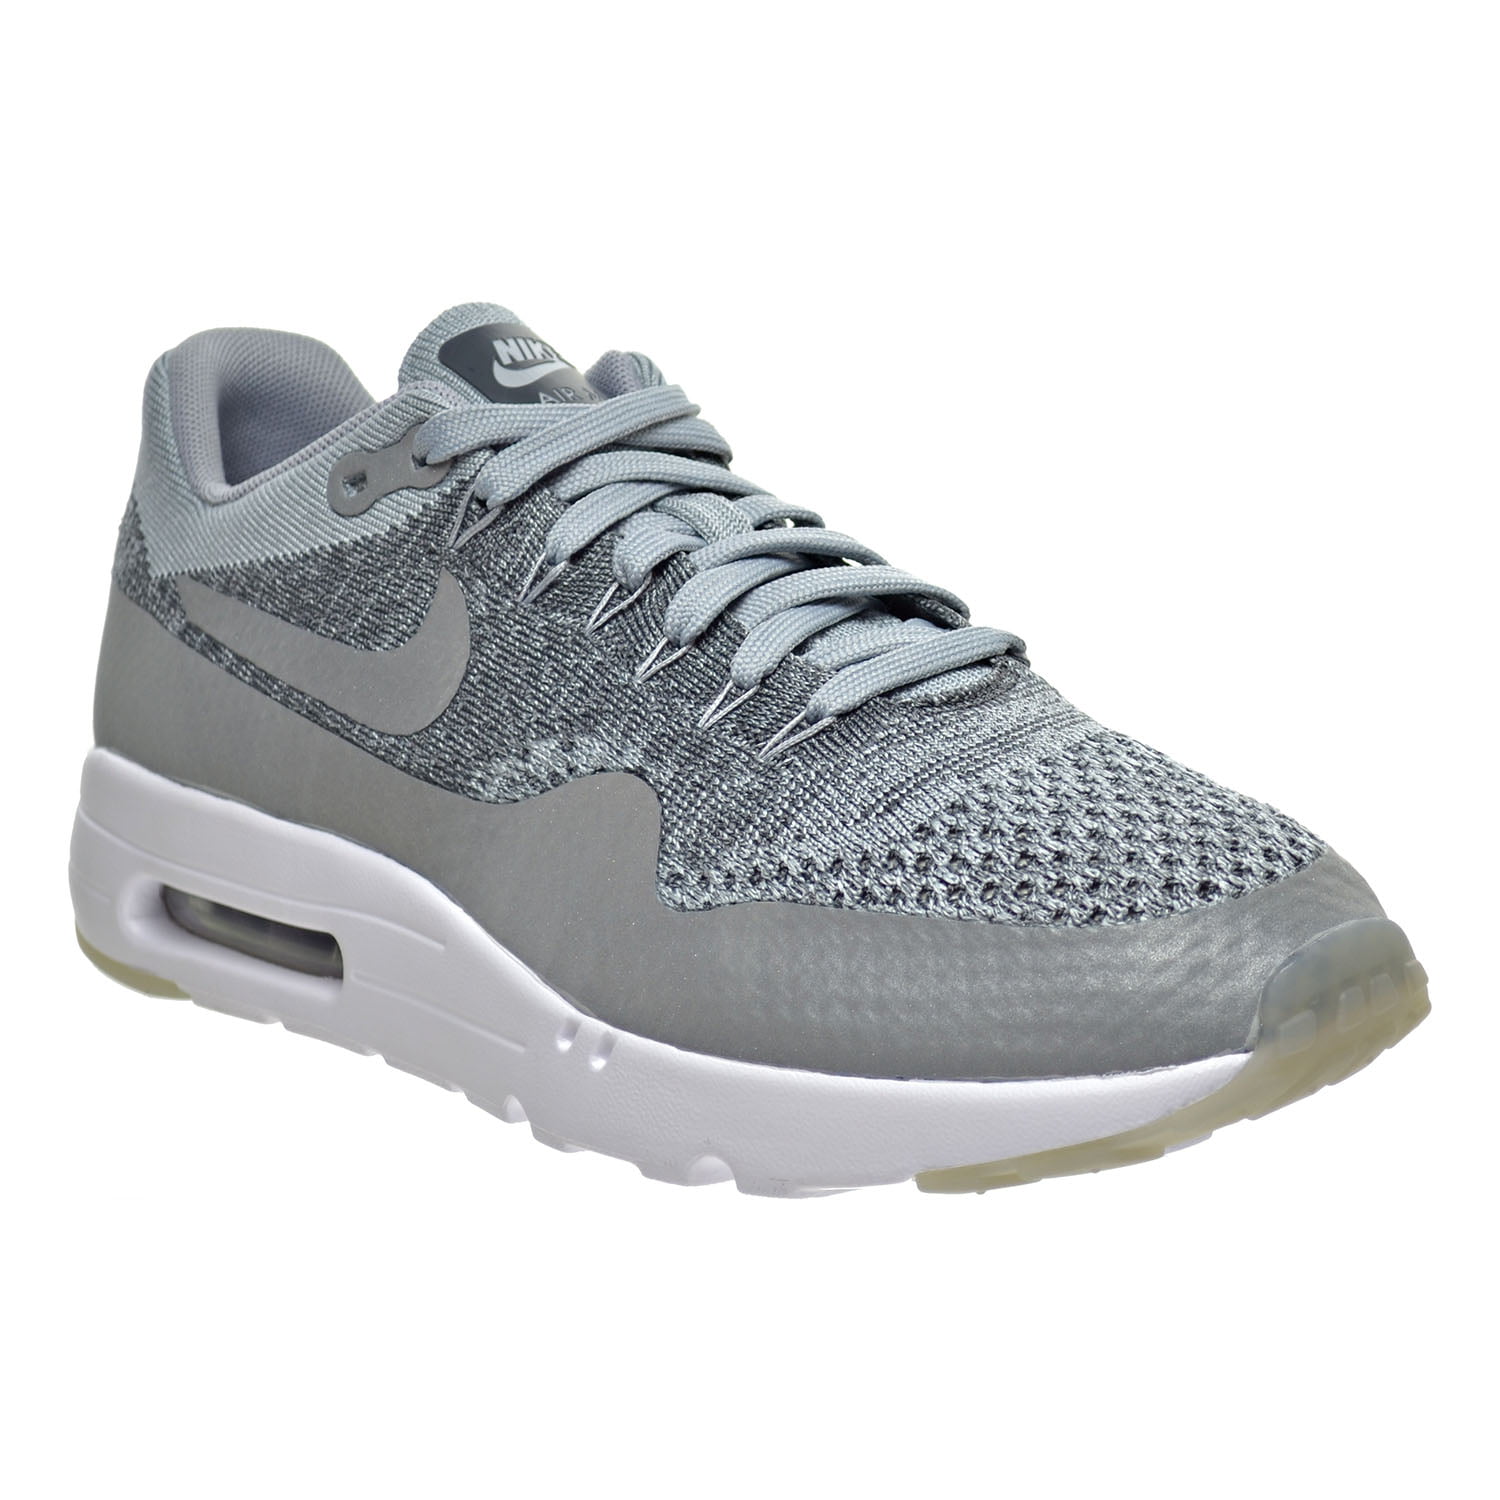 haar last Editie Nike Air Max 1 Ultra Flyknit Men's Shoes Wolf Grey/Dark Grey/White  843384-001 (12 D(M) US) - Walmart.com